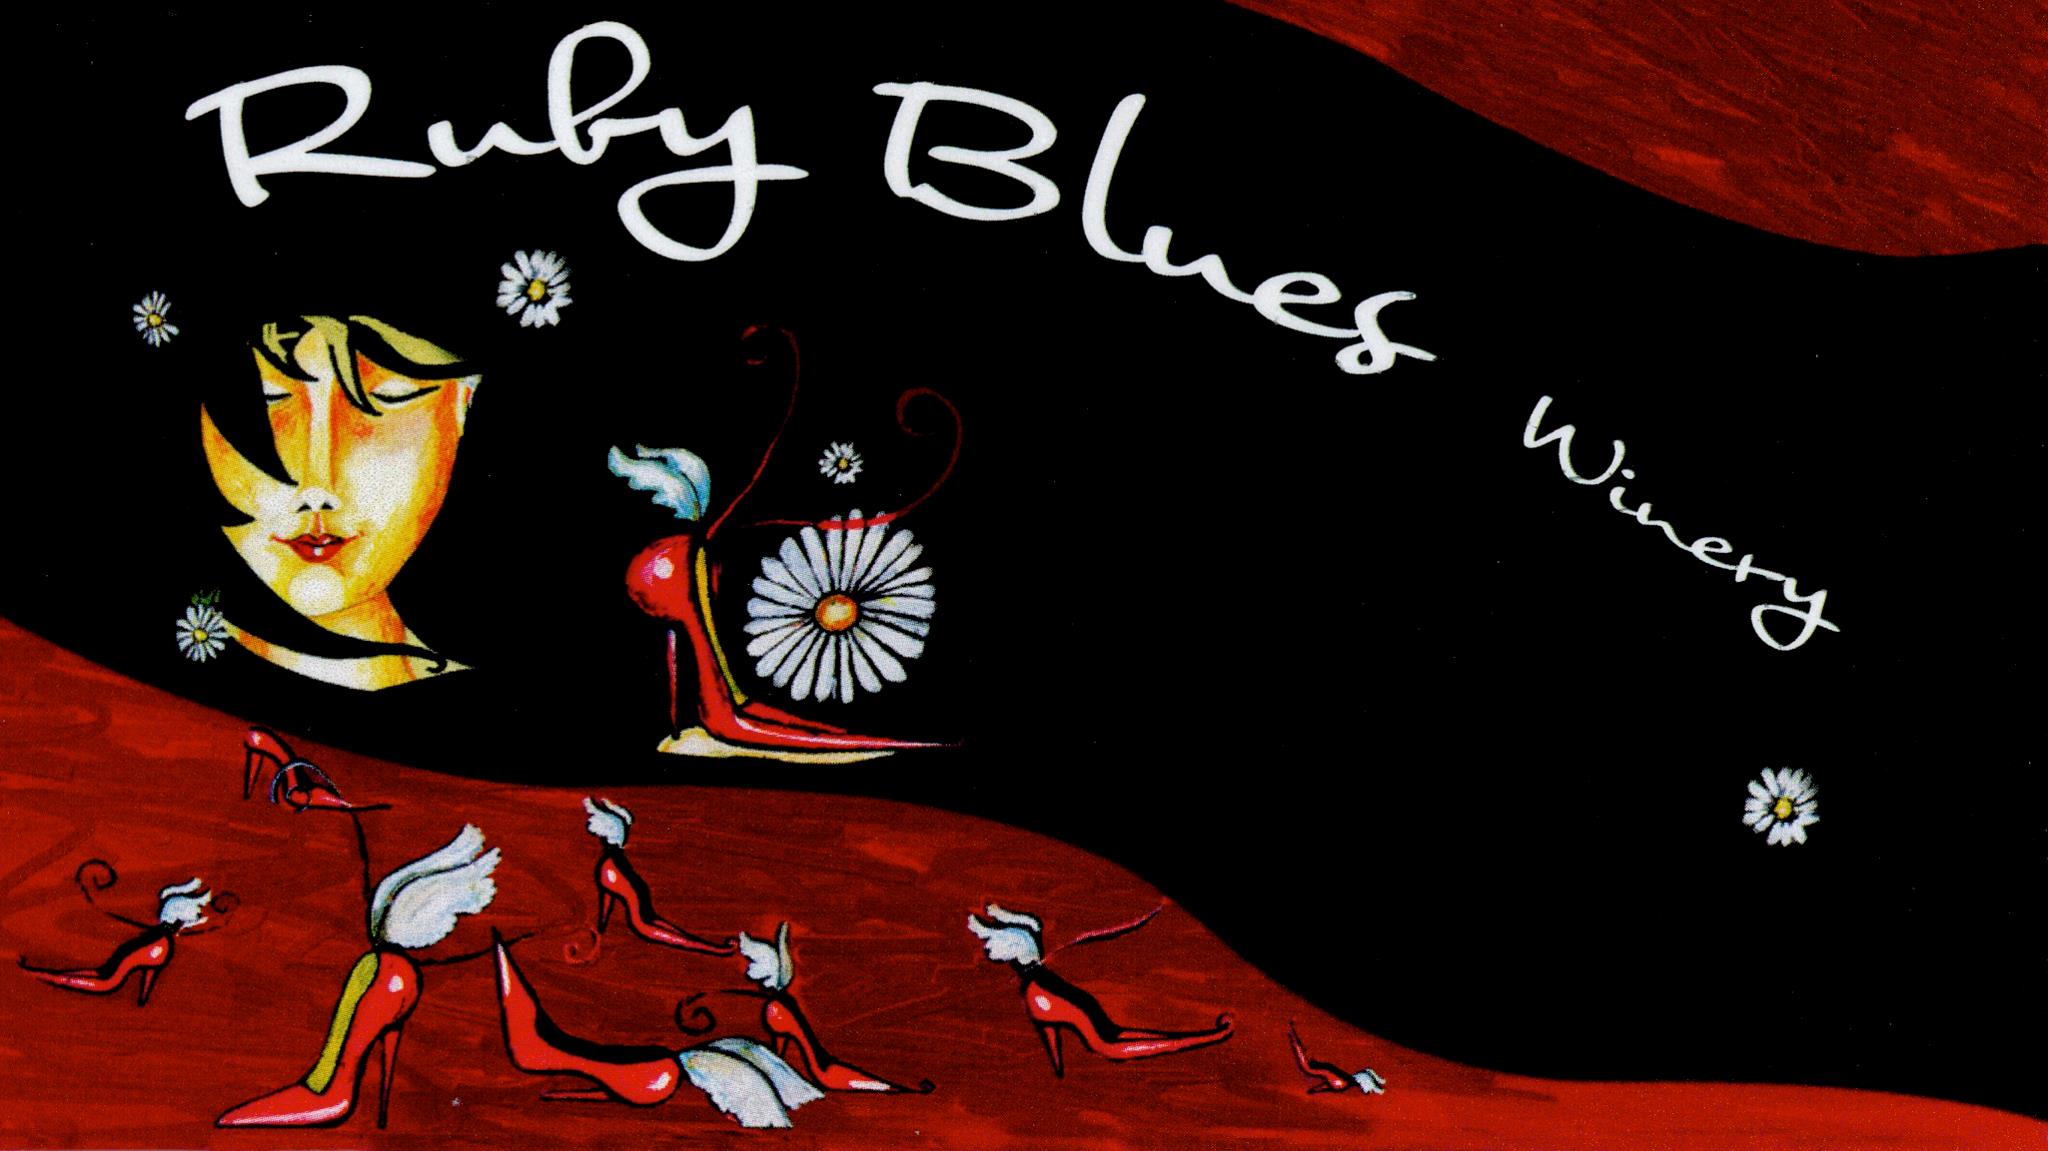 Ruby Blues Winery